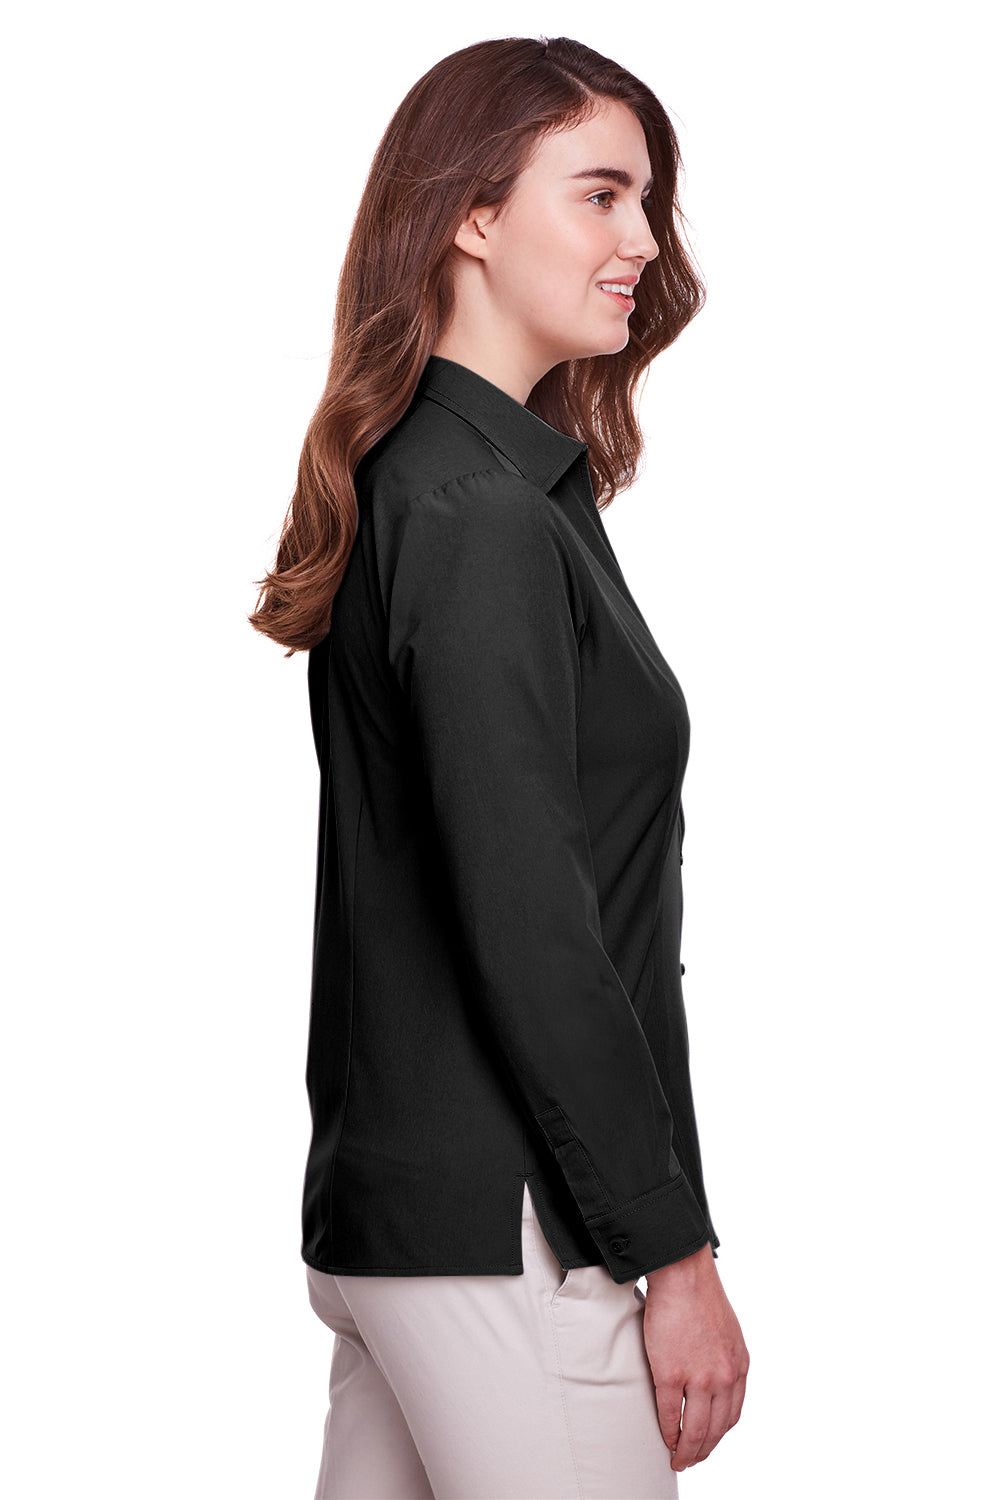 UltraClub UC500W Womens Bradley Performance Moisture Wicking Long Sleeve Button Down Shirt Black Side